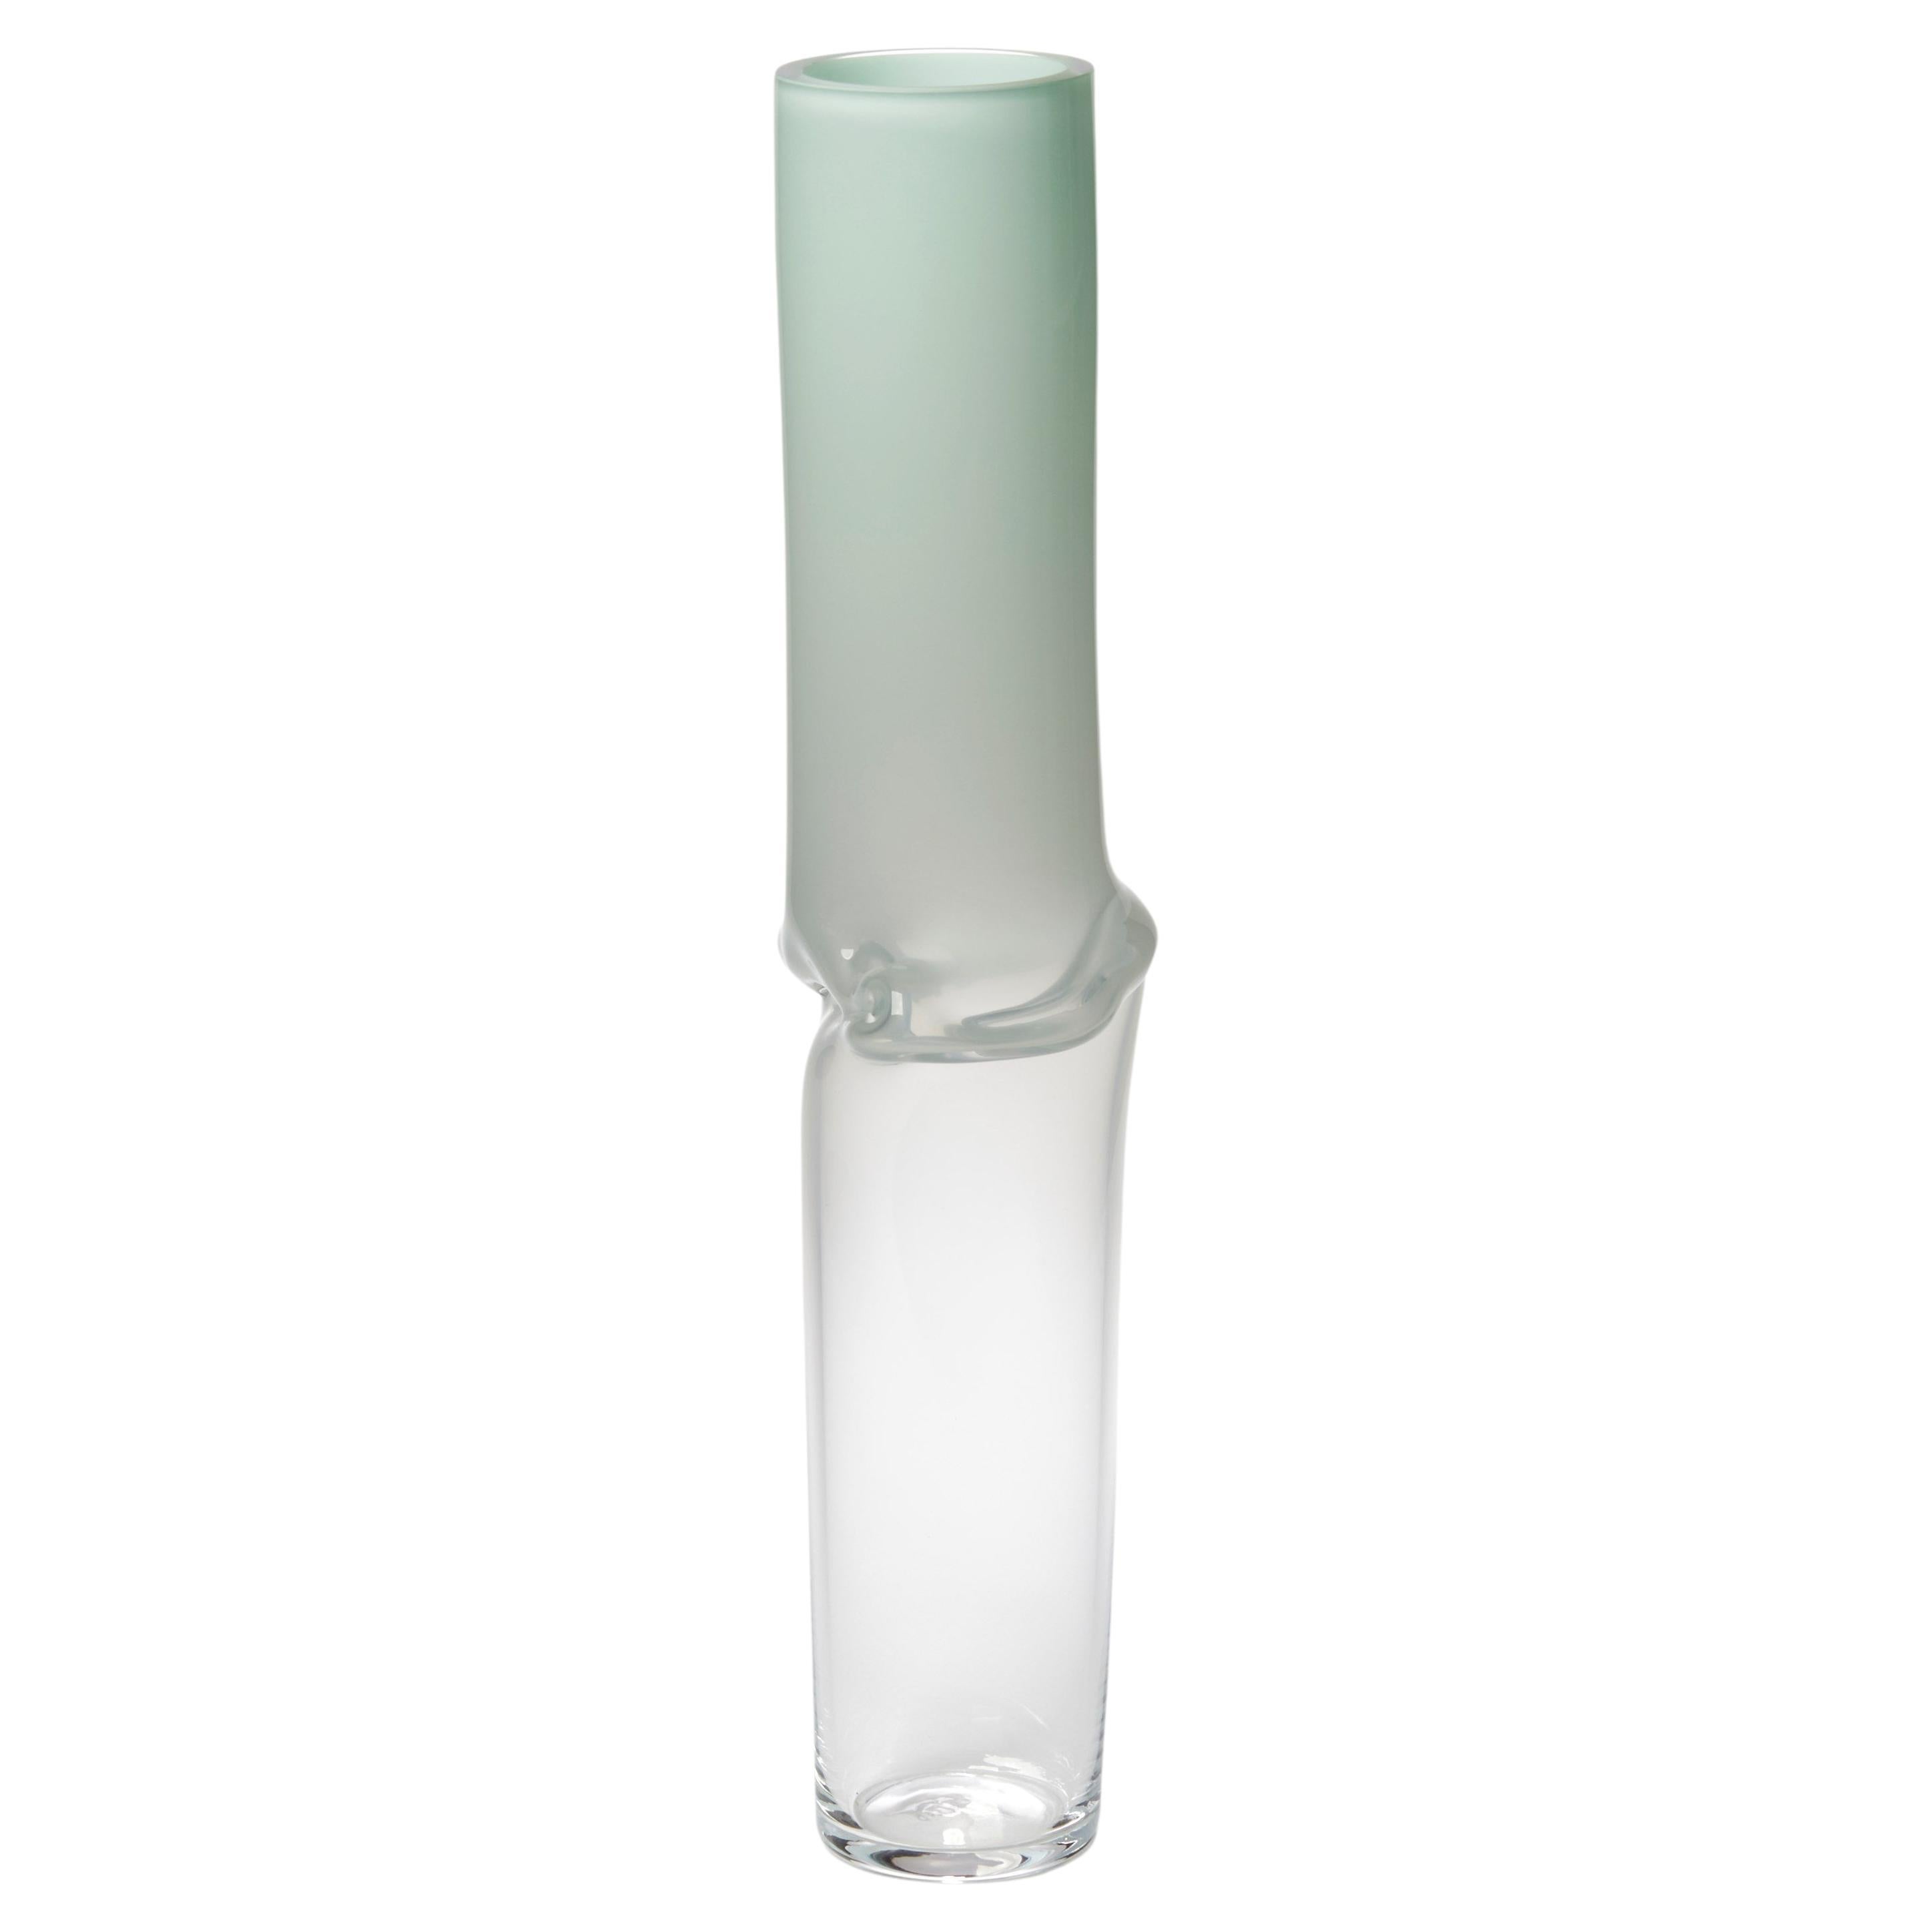 Torsion in Mint 22/01, clear & soft jade glass sculptural vessel by Emma Baker For Sale